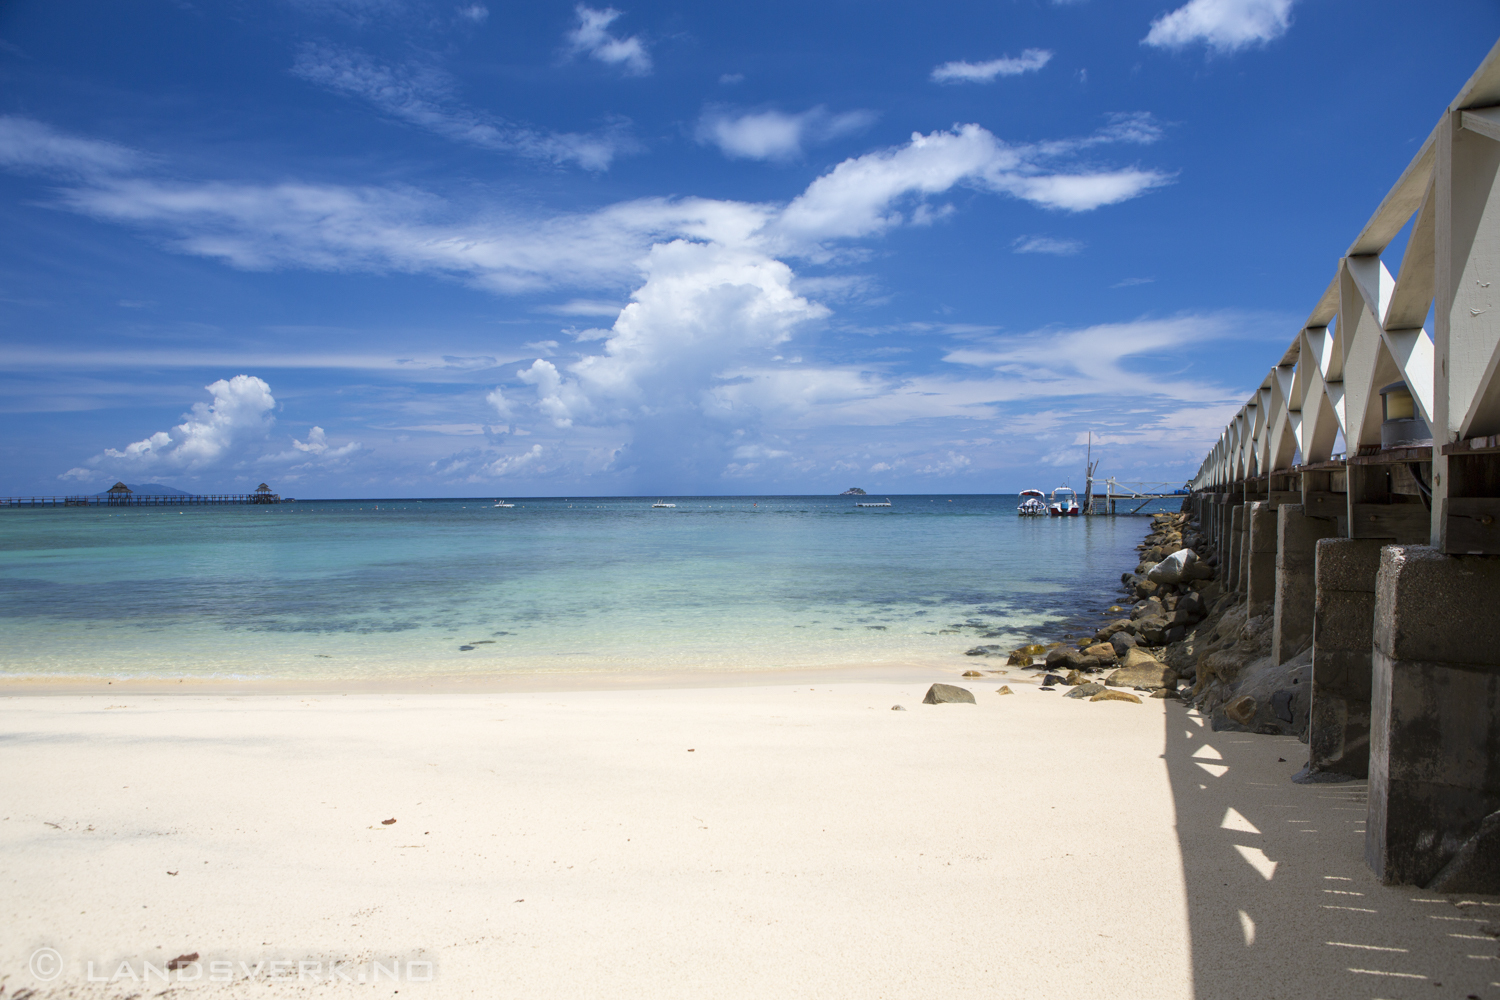 Tioman Island, Malaysia.

(Canon EOS 5D Mark III / Canon EF 24-70mm f/2.8 L USM)